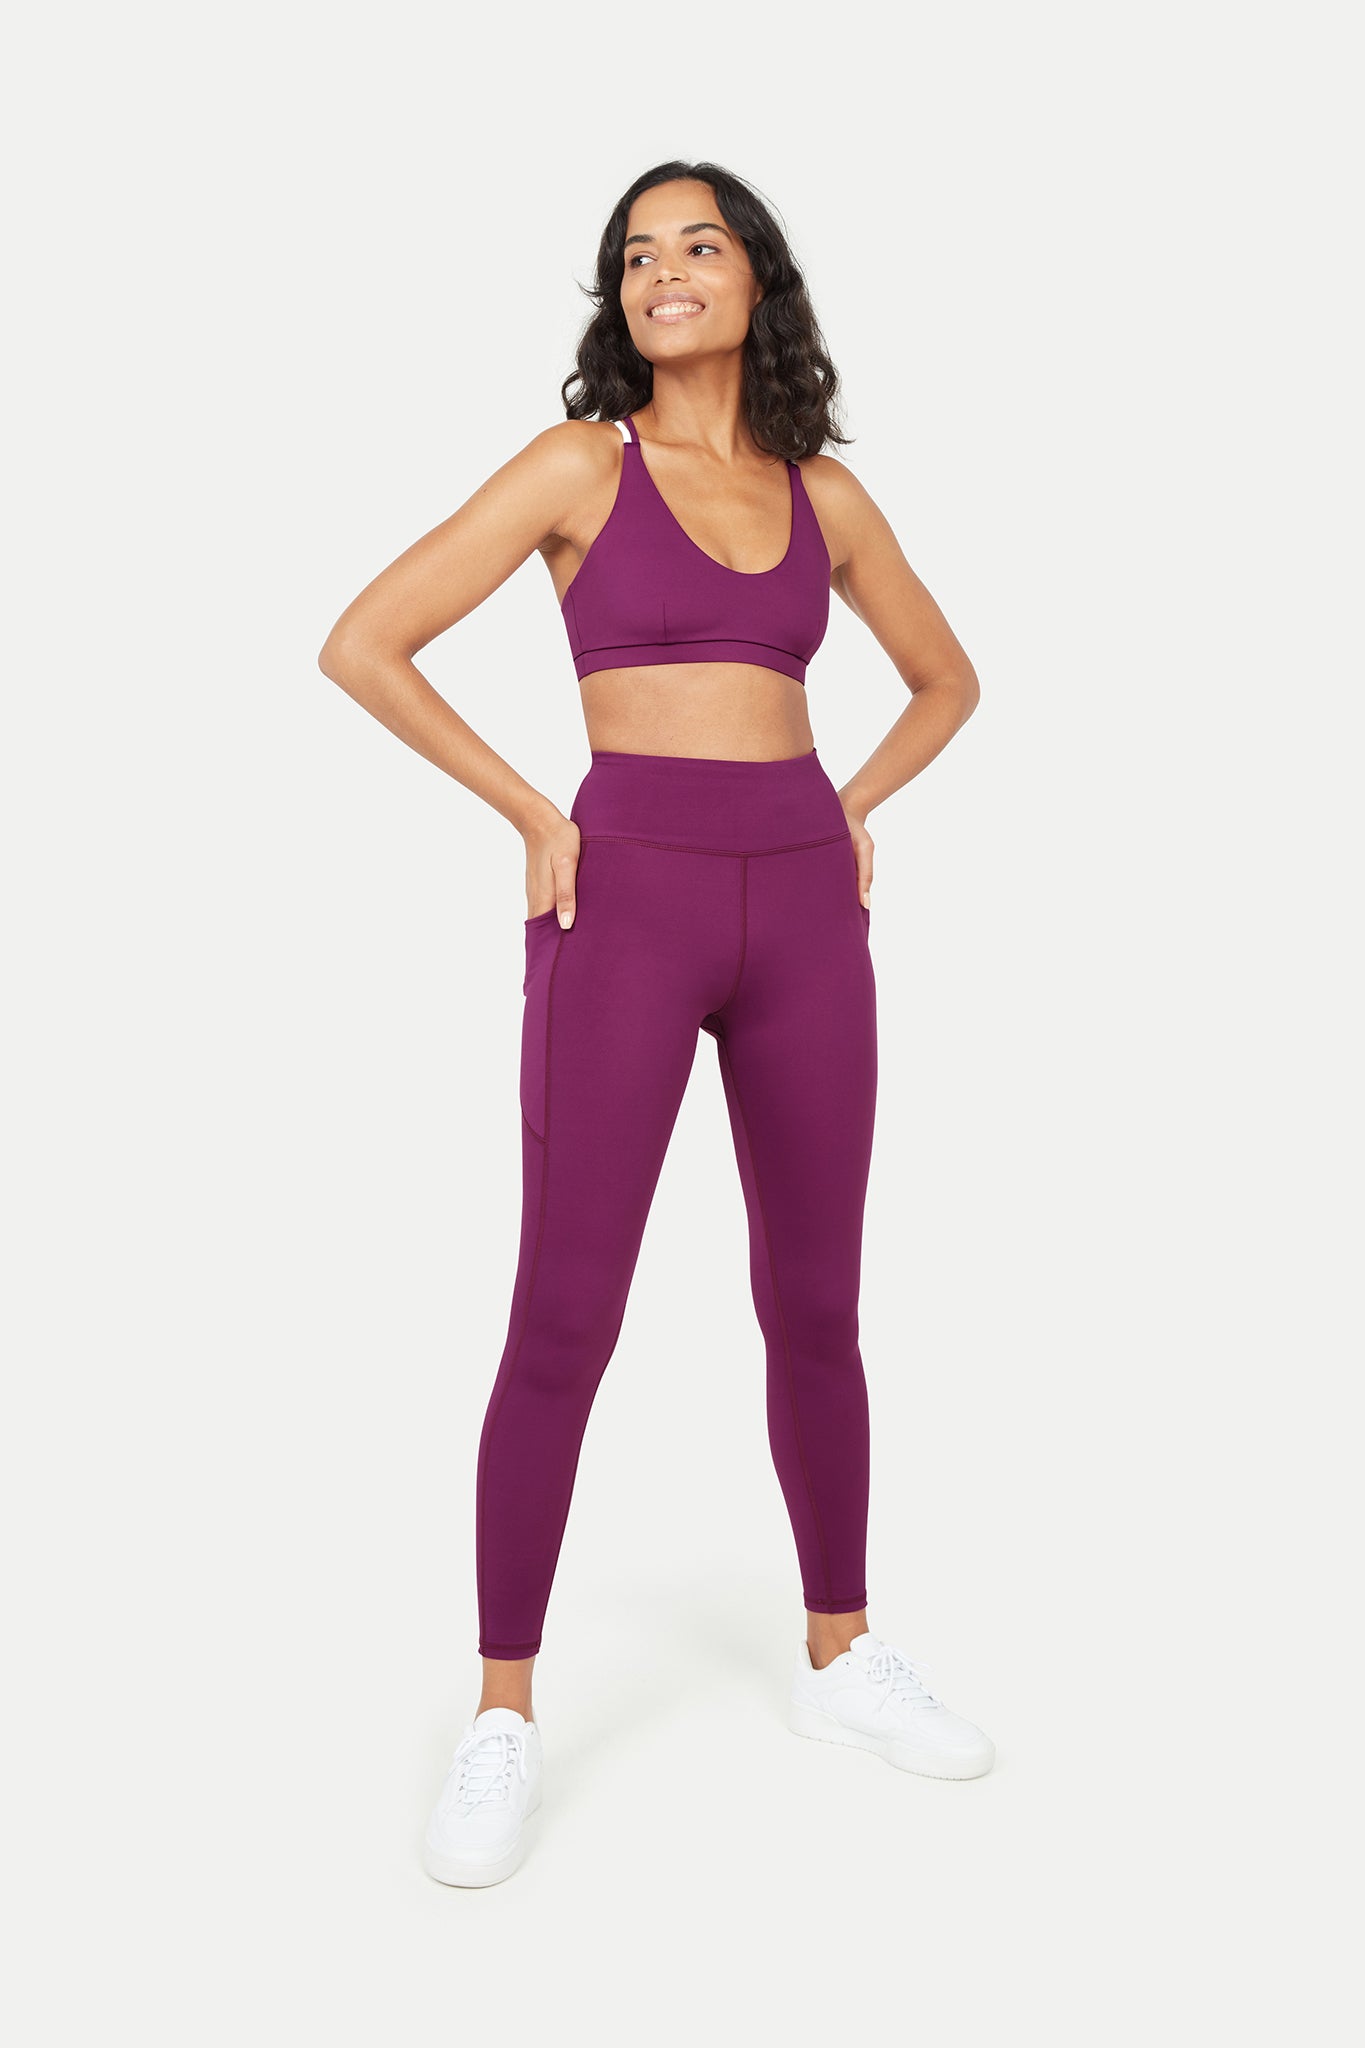 Figs Mauve Pink Performance Underscrub Set sports-bra leggings XL 🎀  Limited Ed.